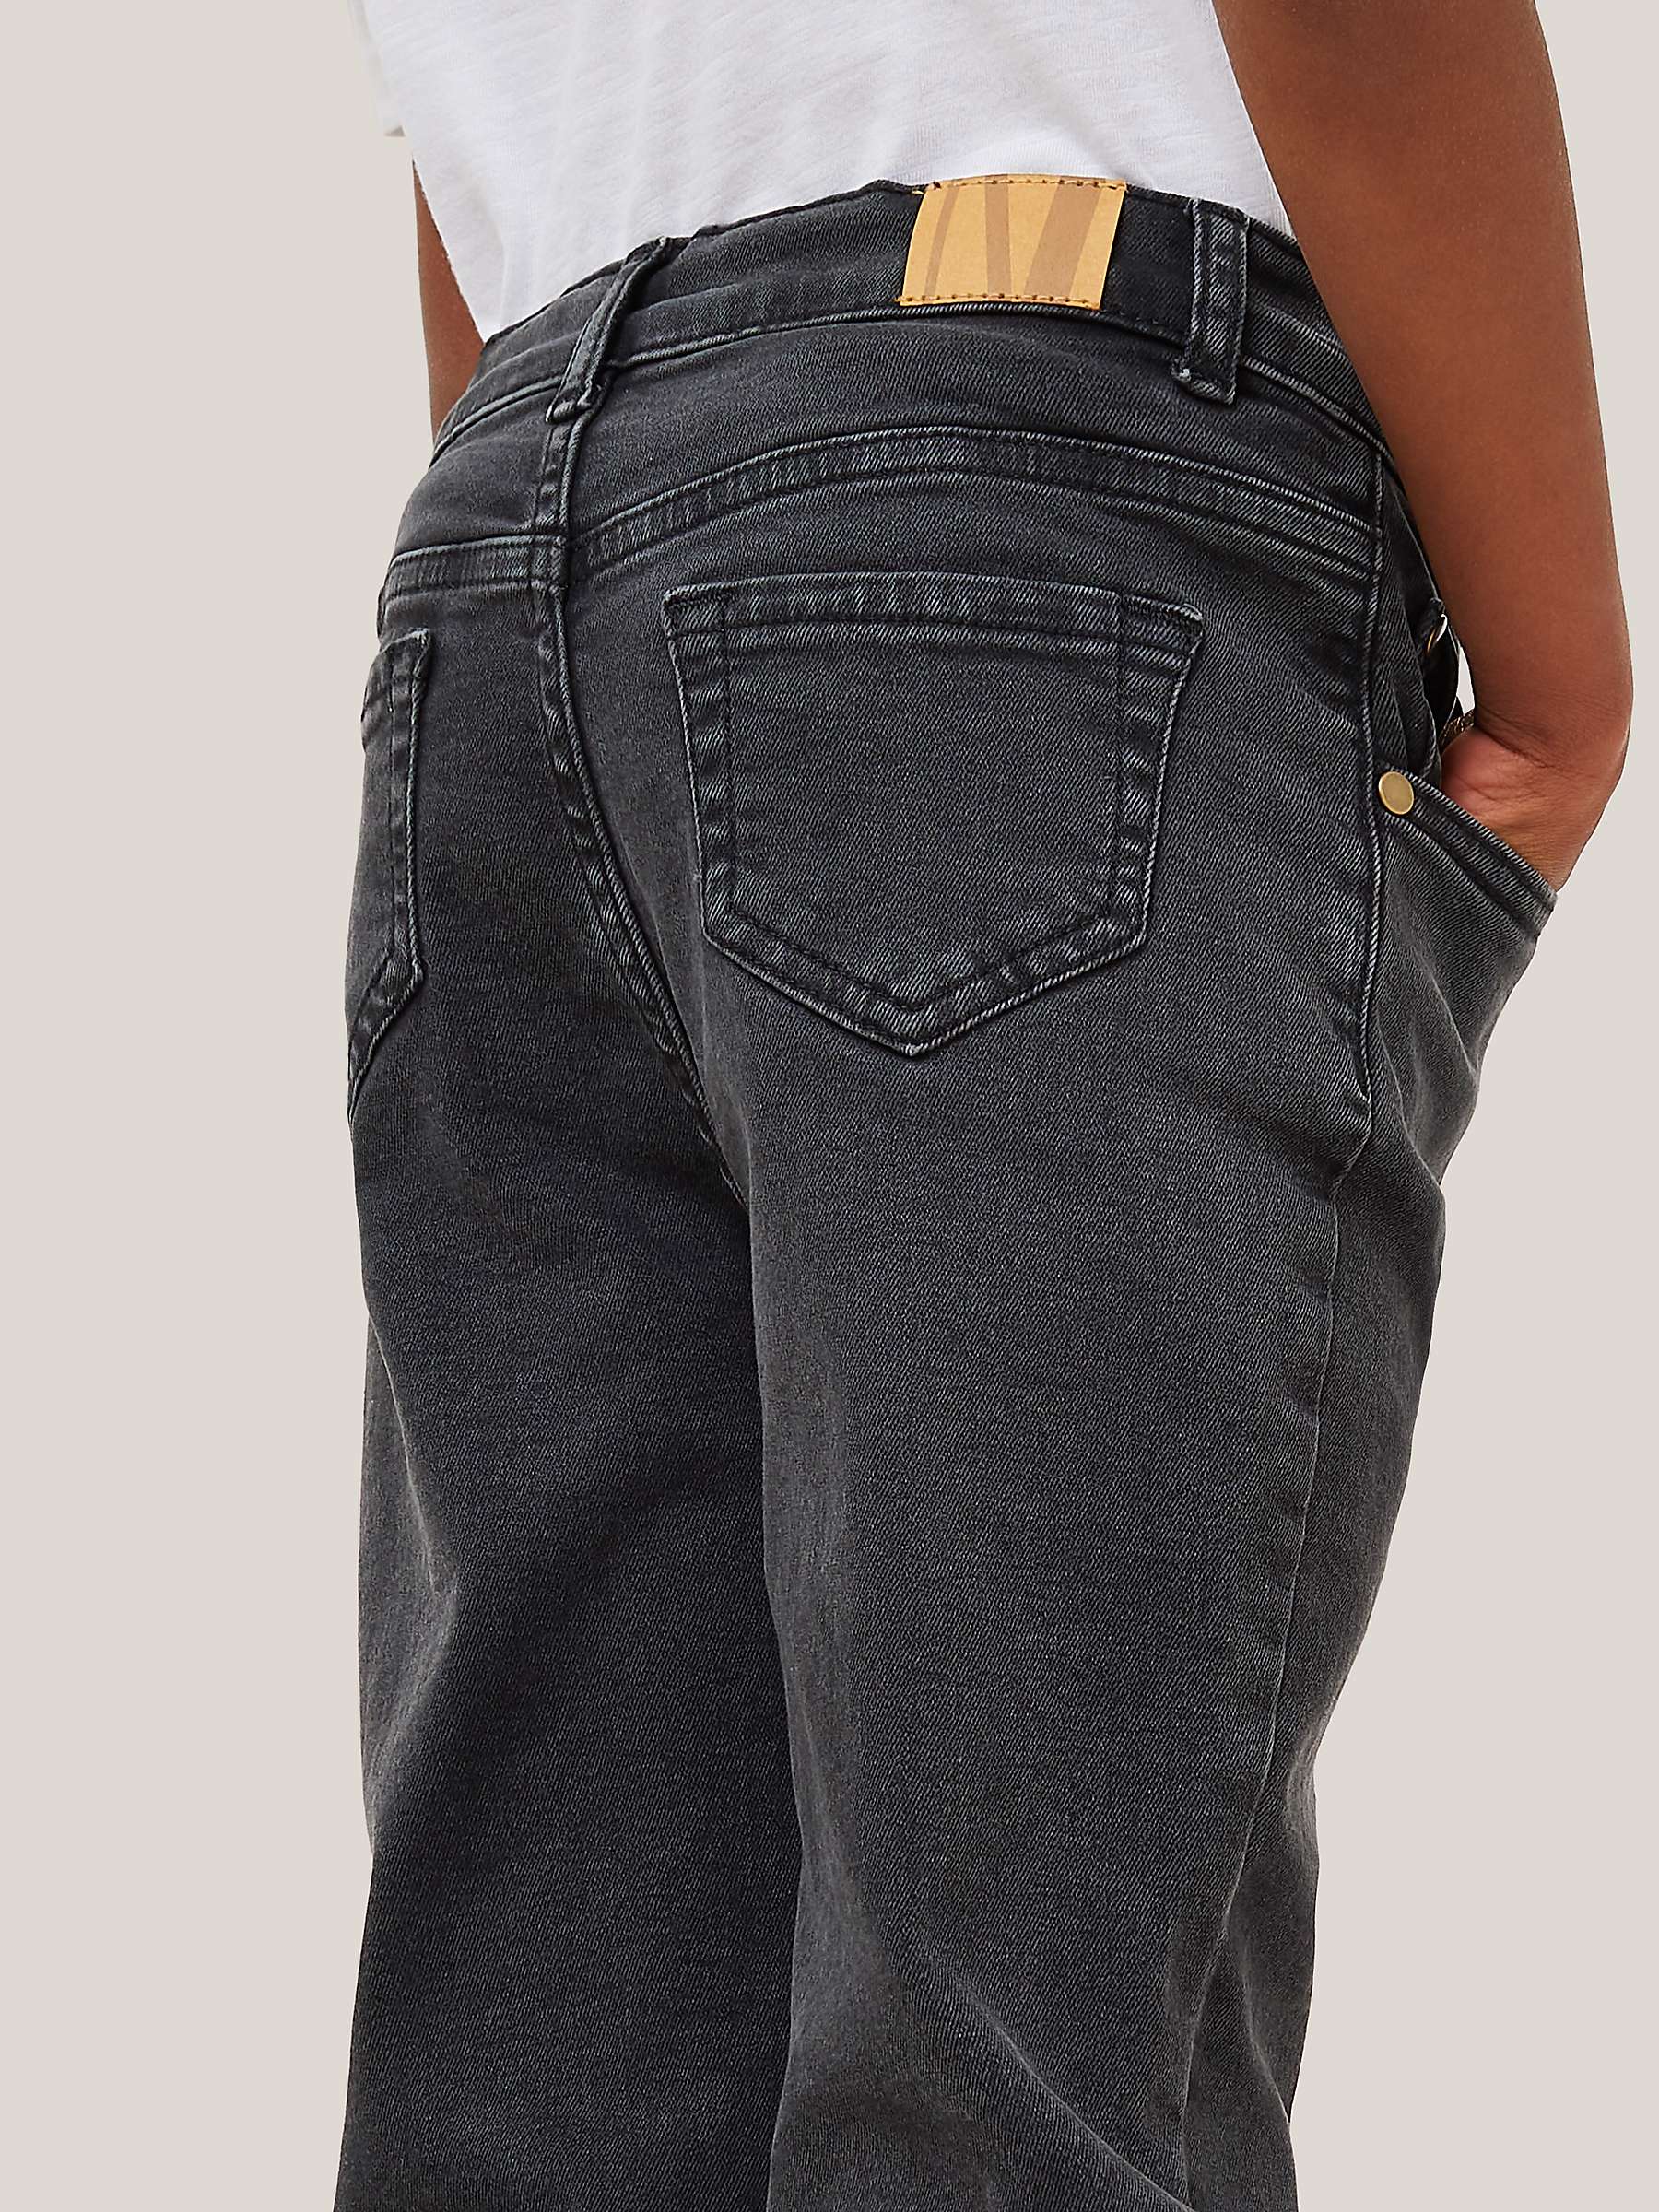 Buy John Lewis Boys' Skinny Denim Jeans, Black Online at johnlewis.com